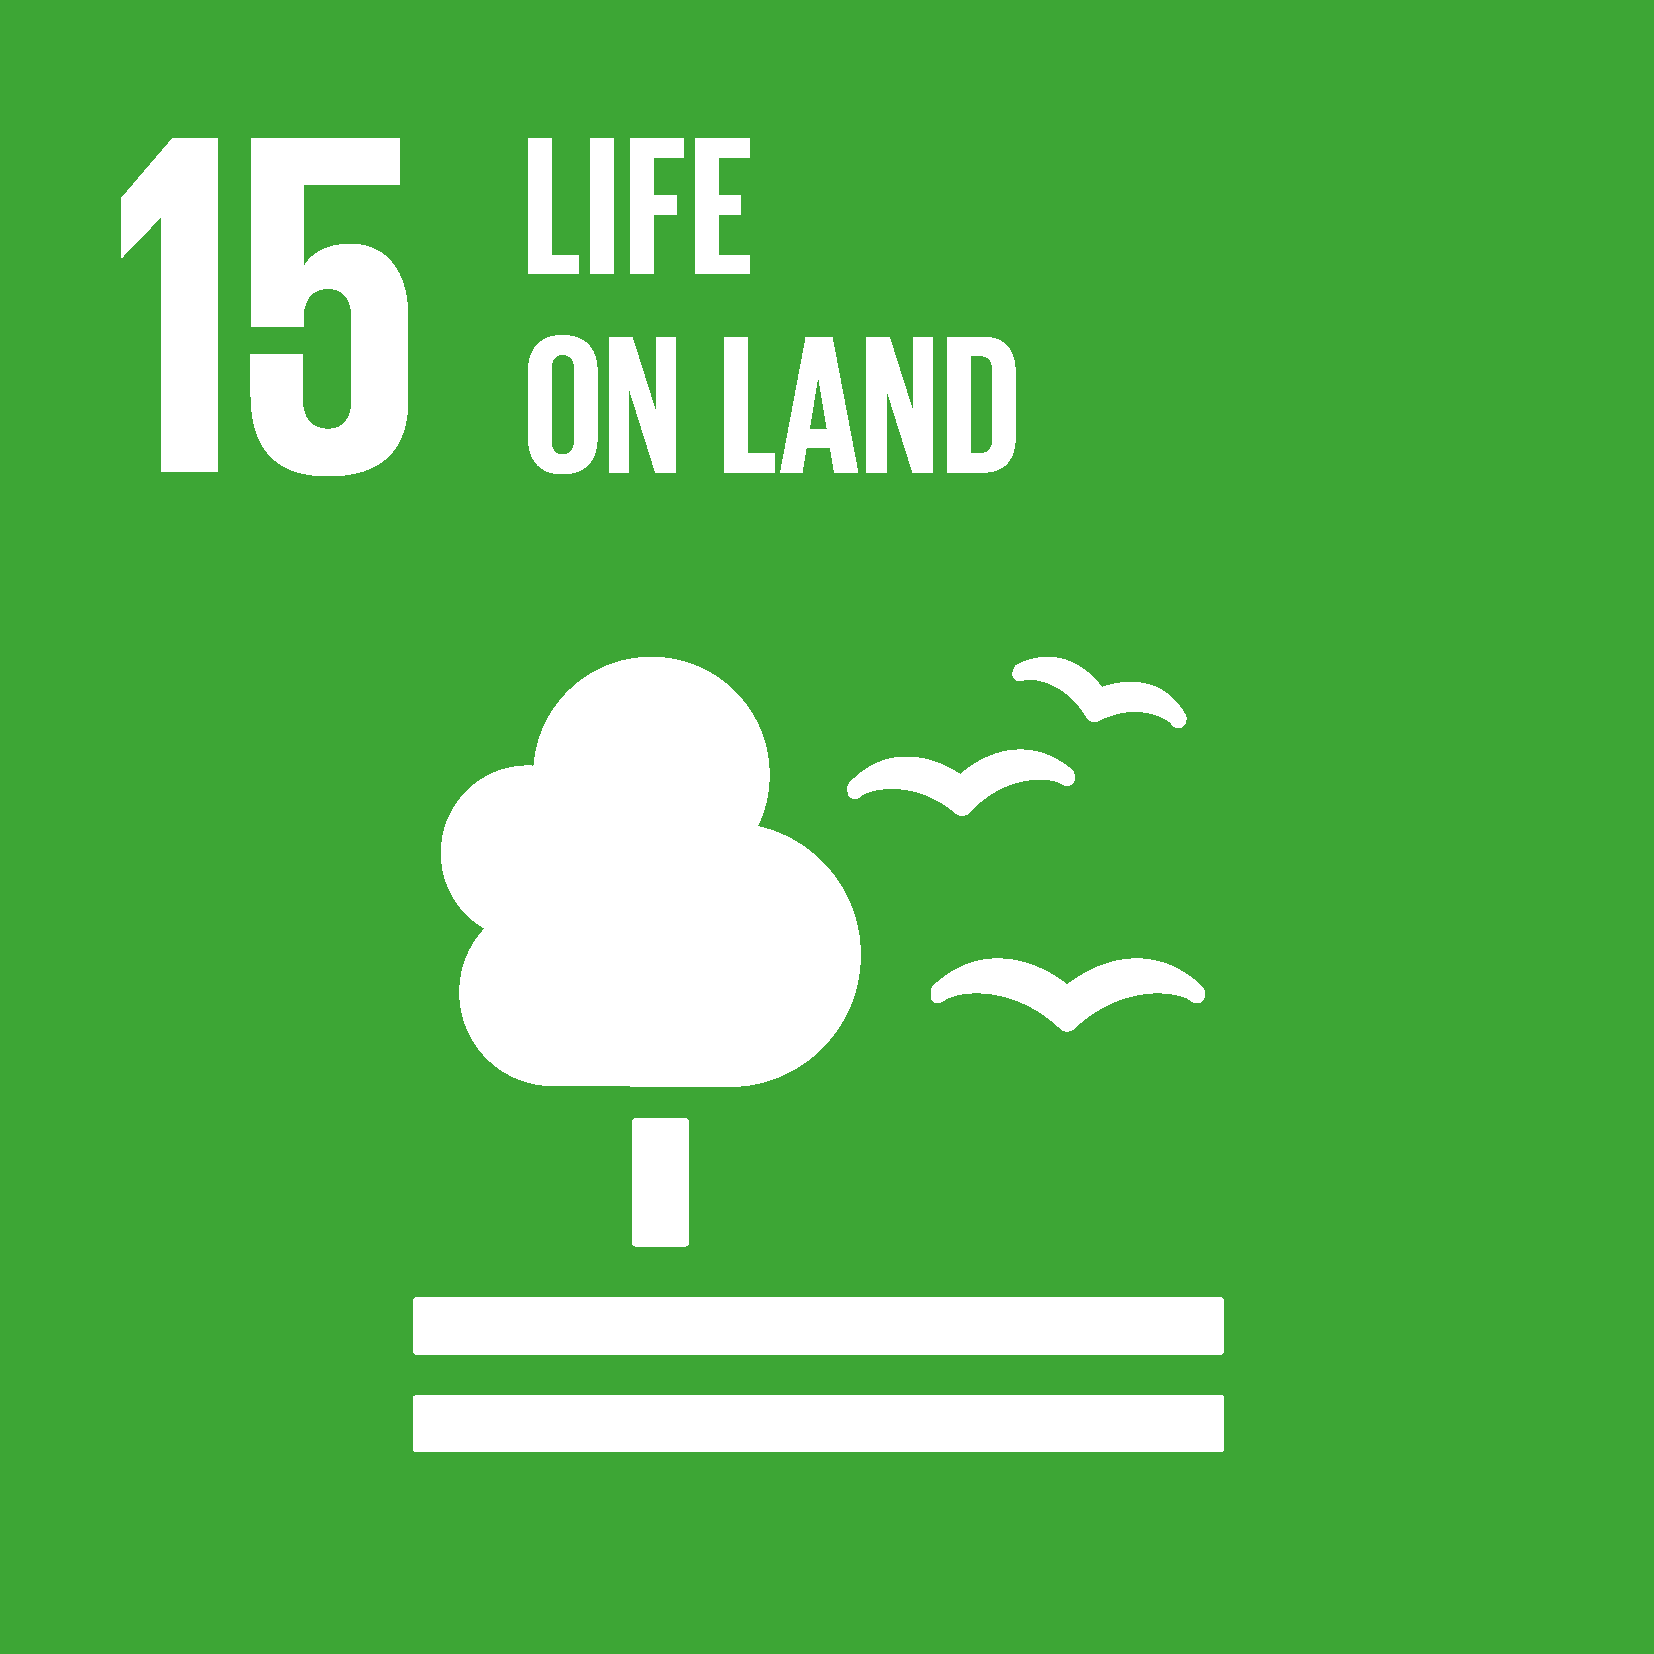 The Global Goal 15 Life on land